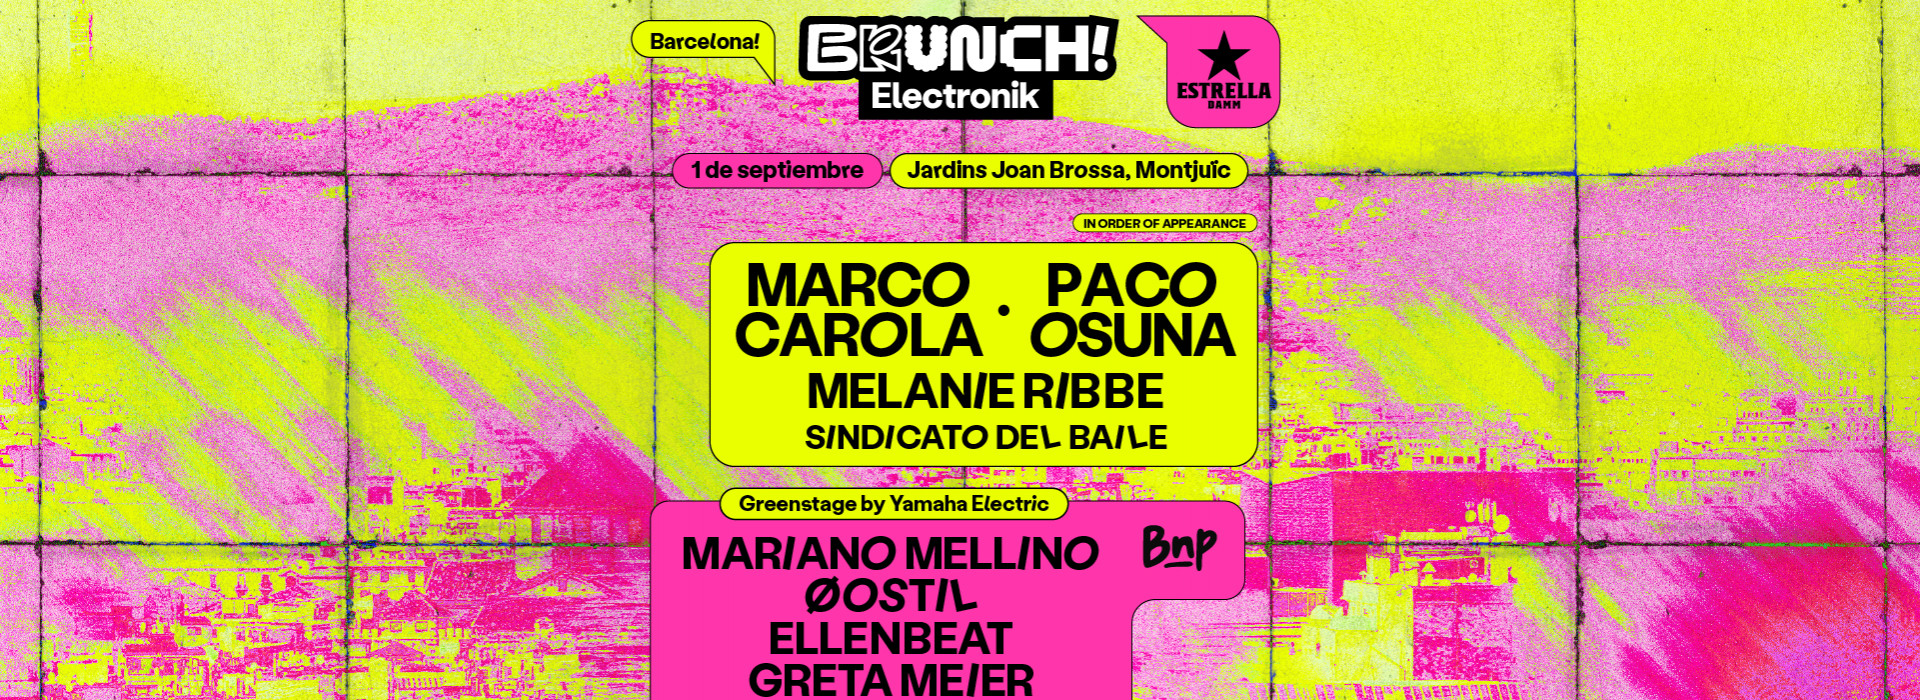 BRUNCH ELECTRONIK BARCELONA #MARCO CAROLA